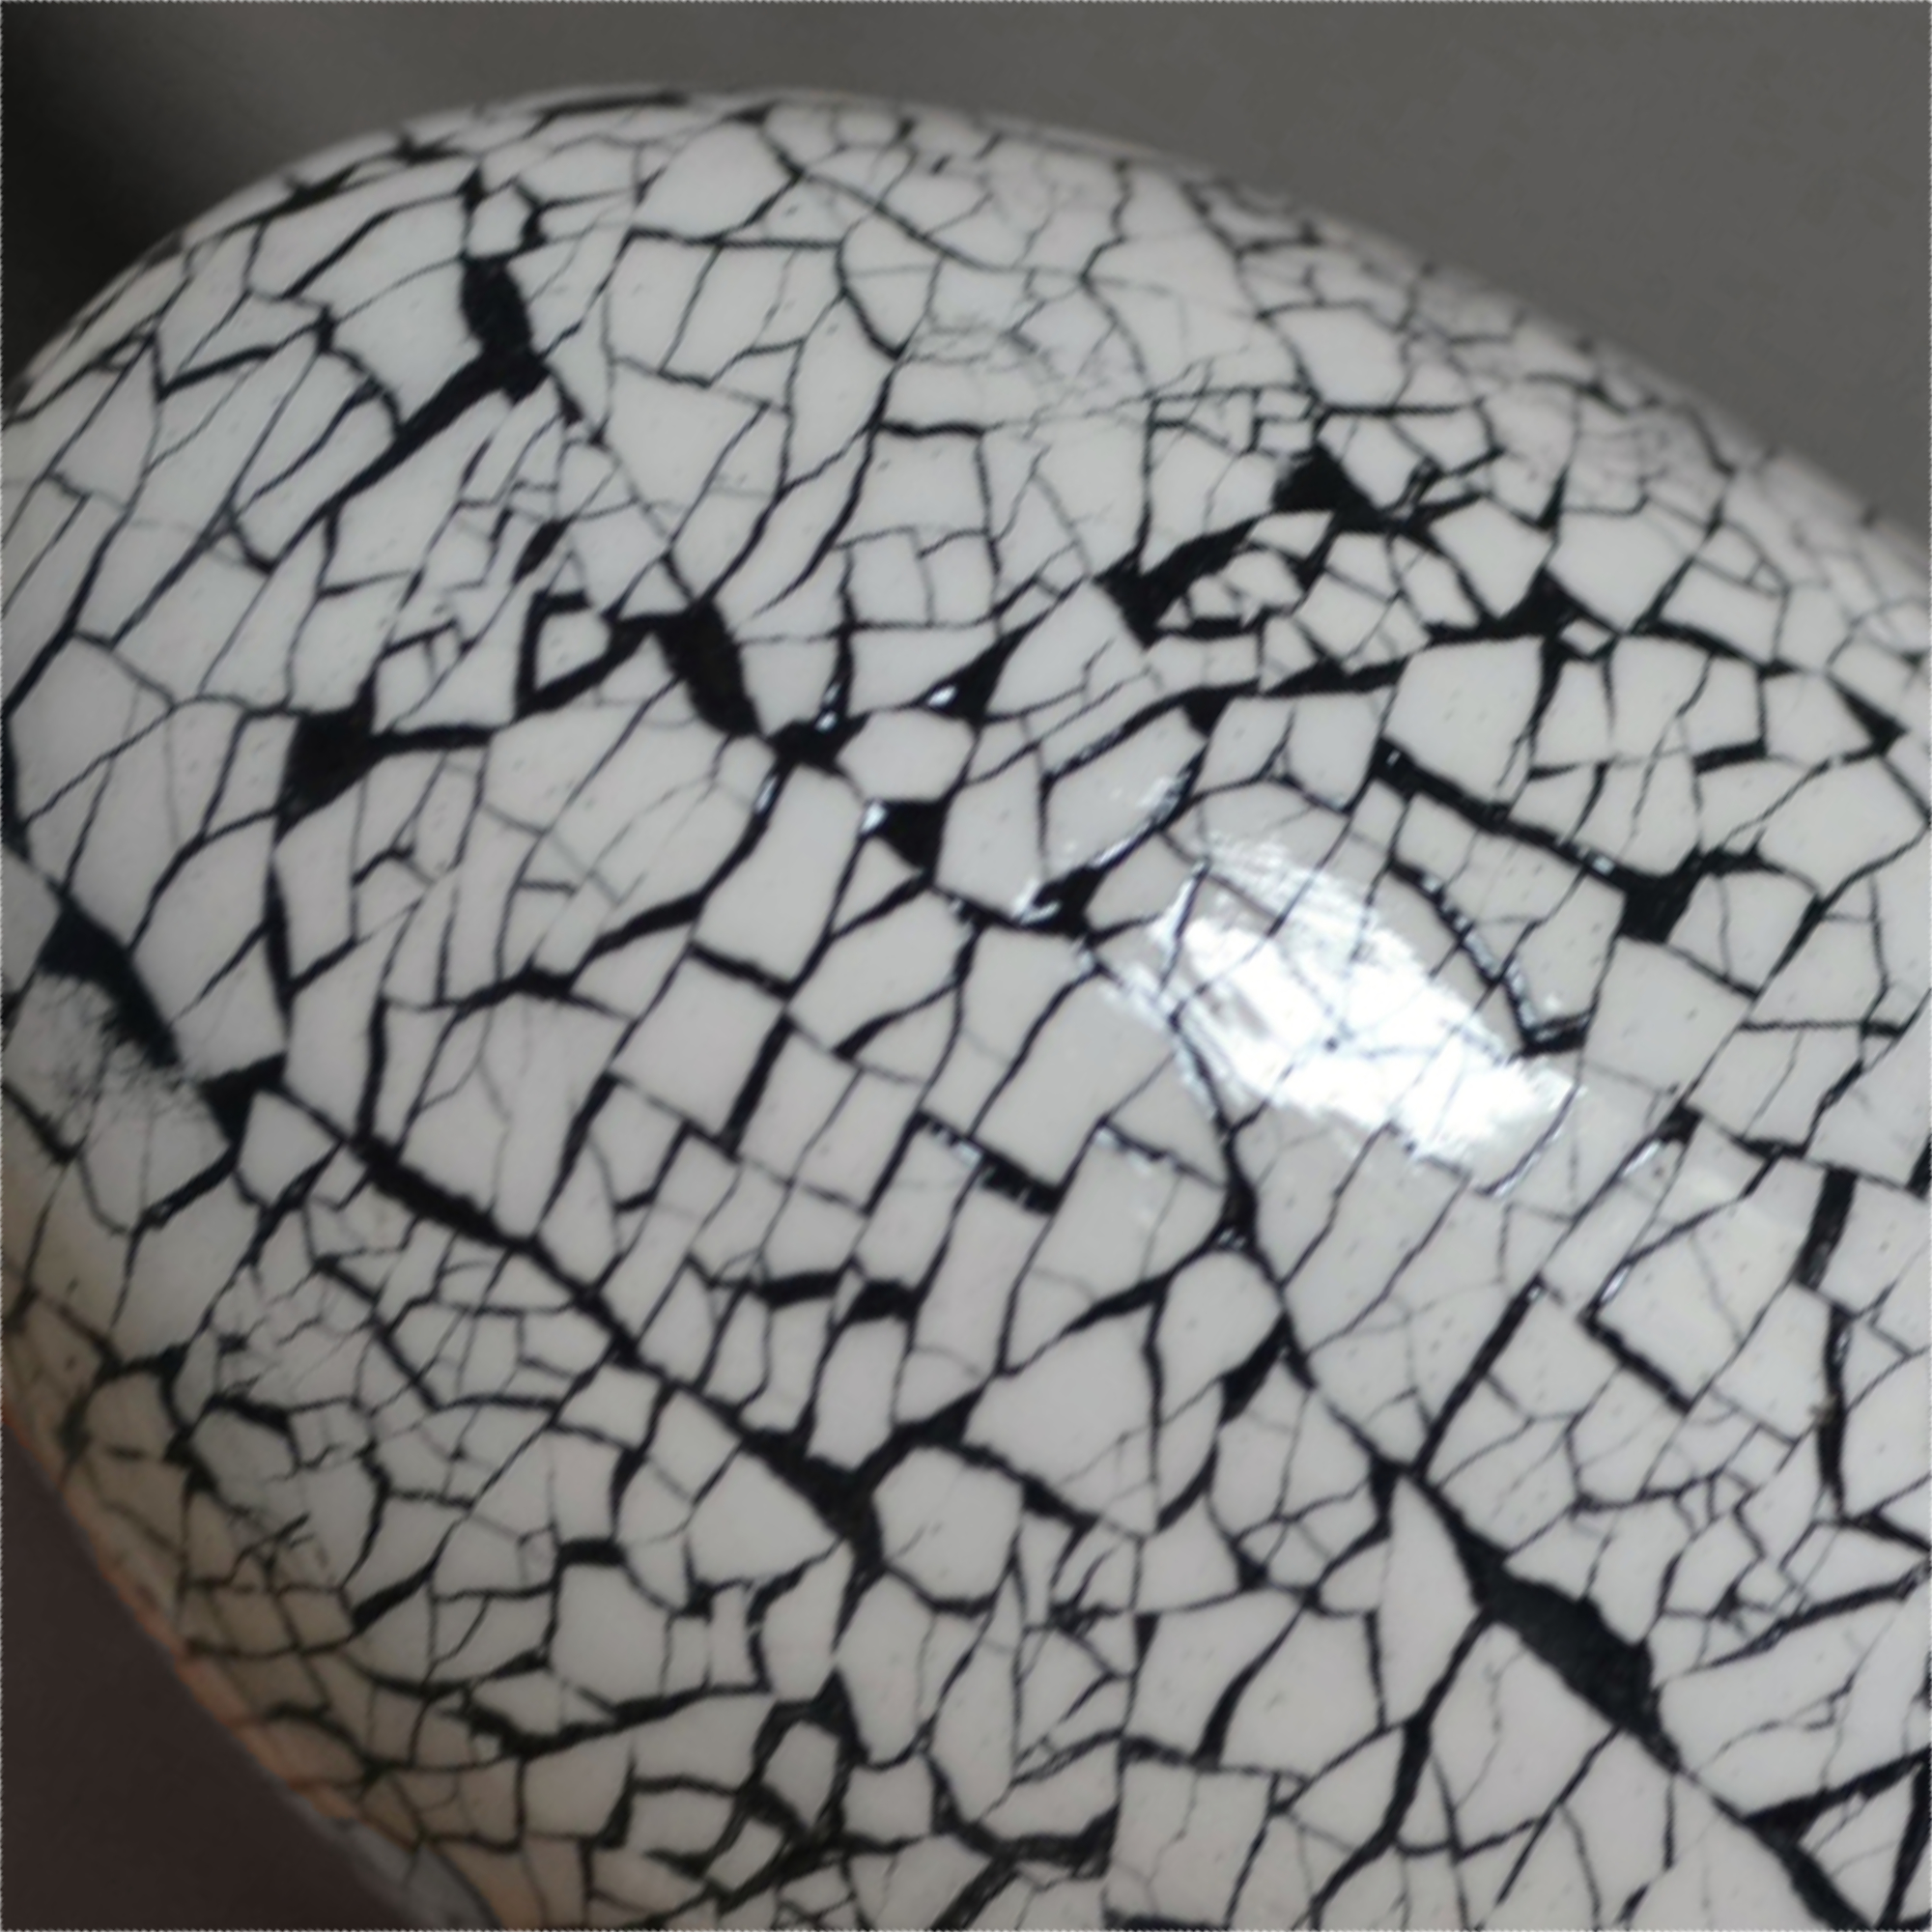 eggshell-curved-surface.jpg